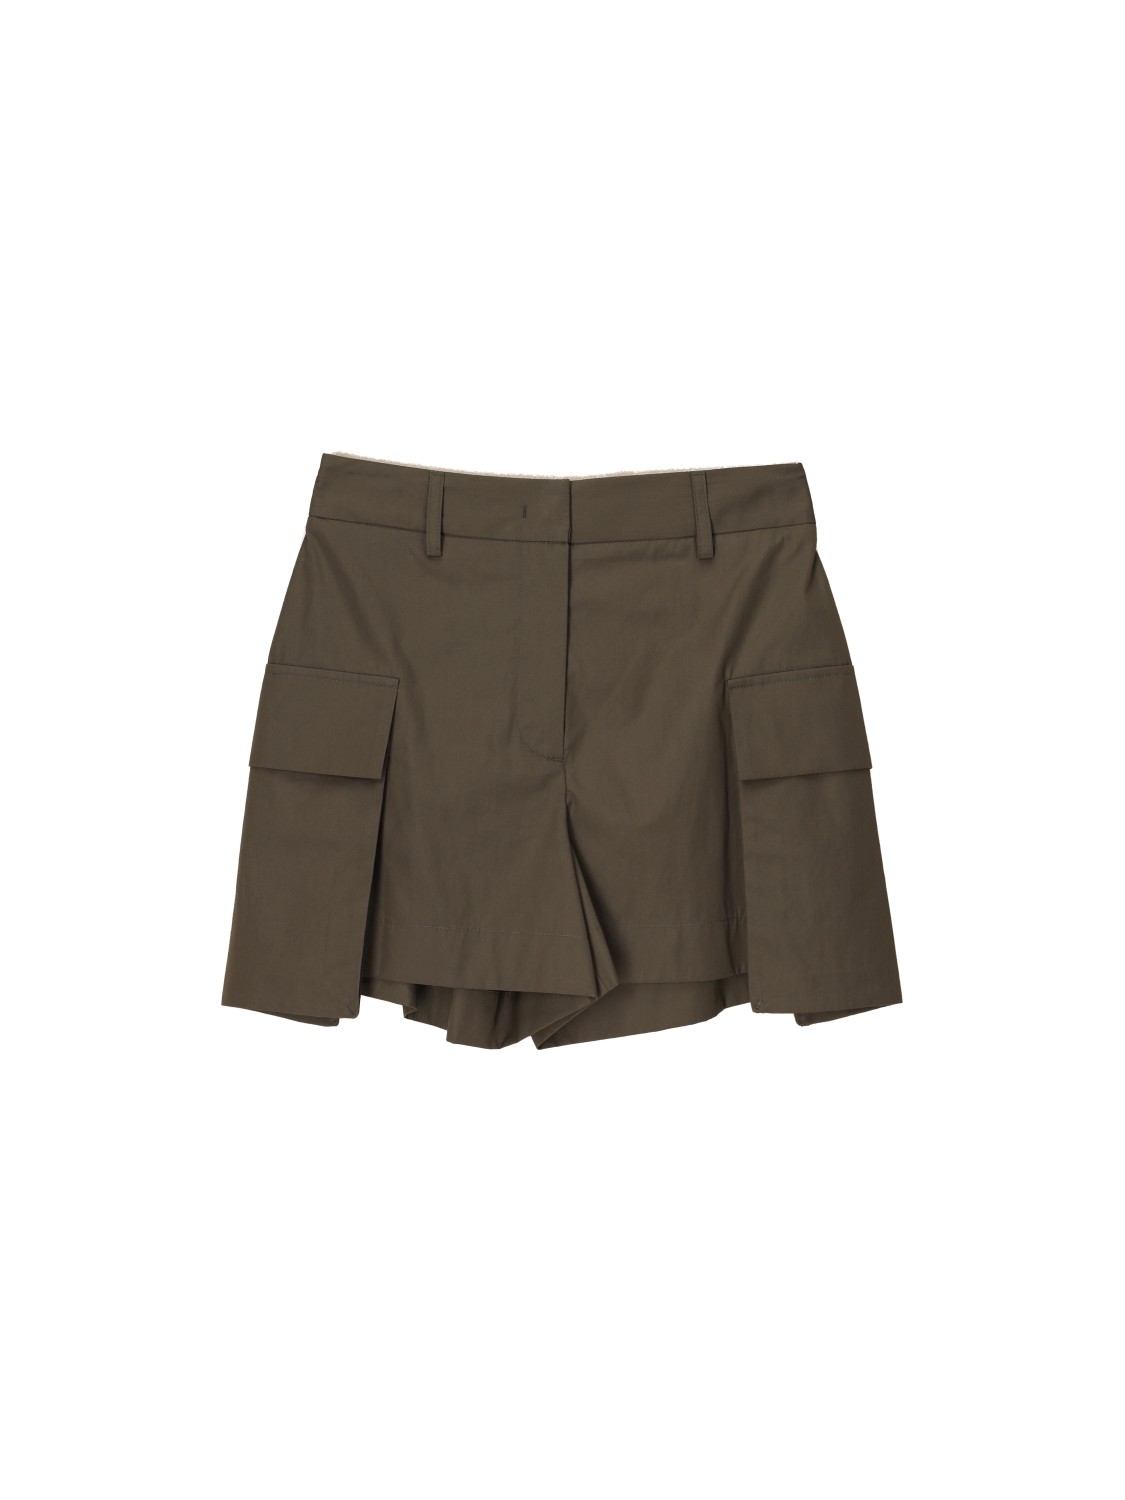 Lorena Antoniazzi Baumwoll-Shorts im Cargo-Stil khaki 34